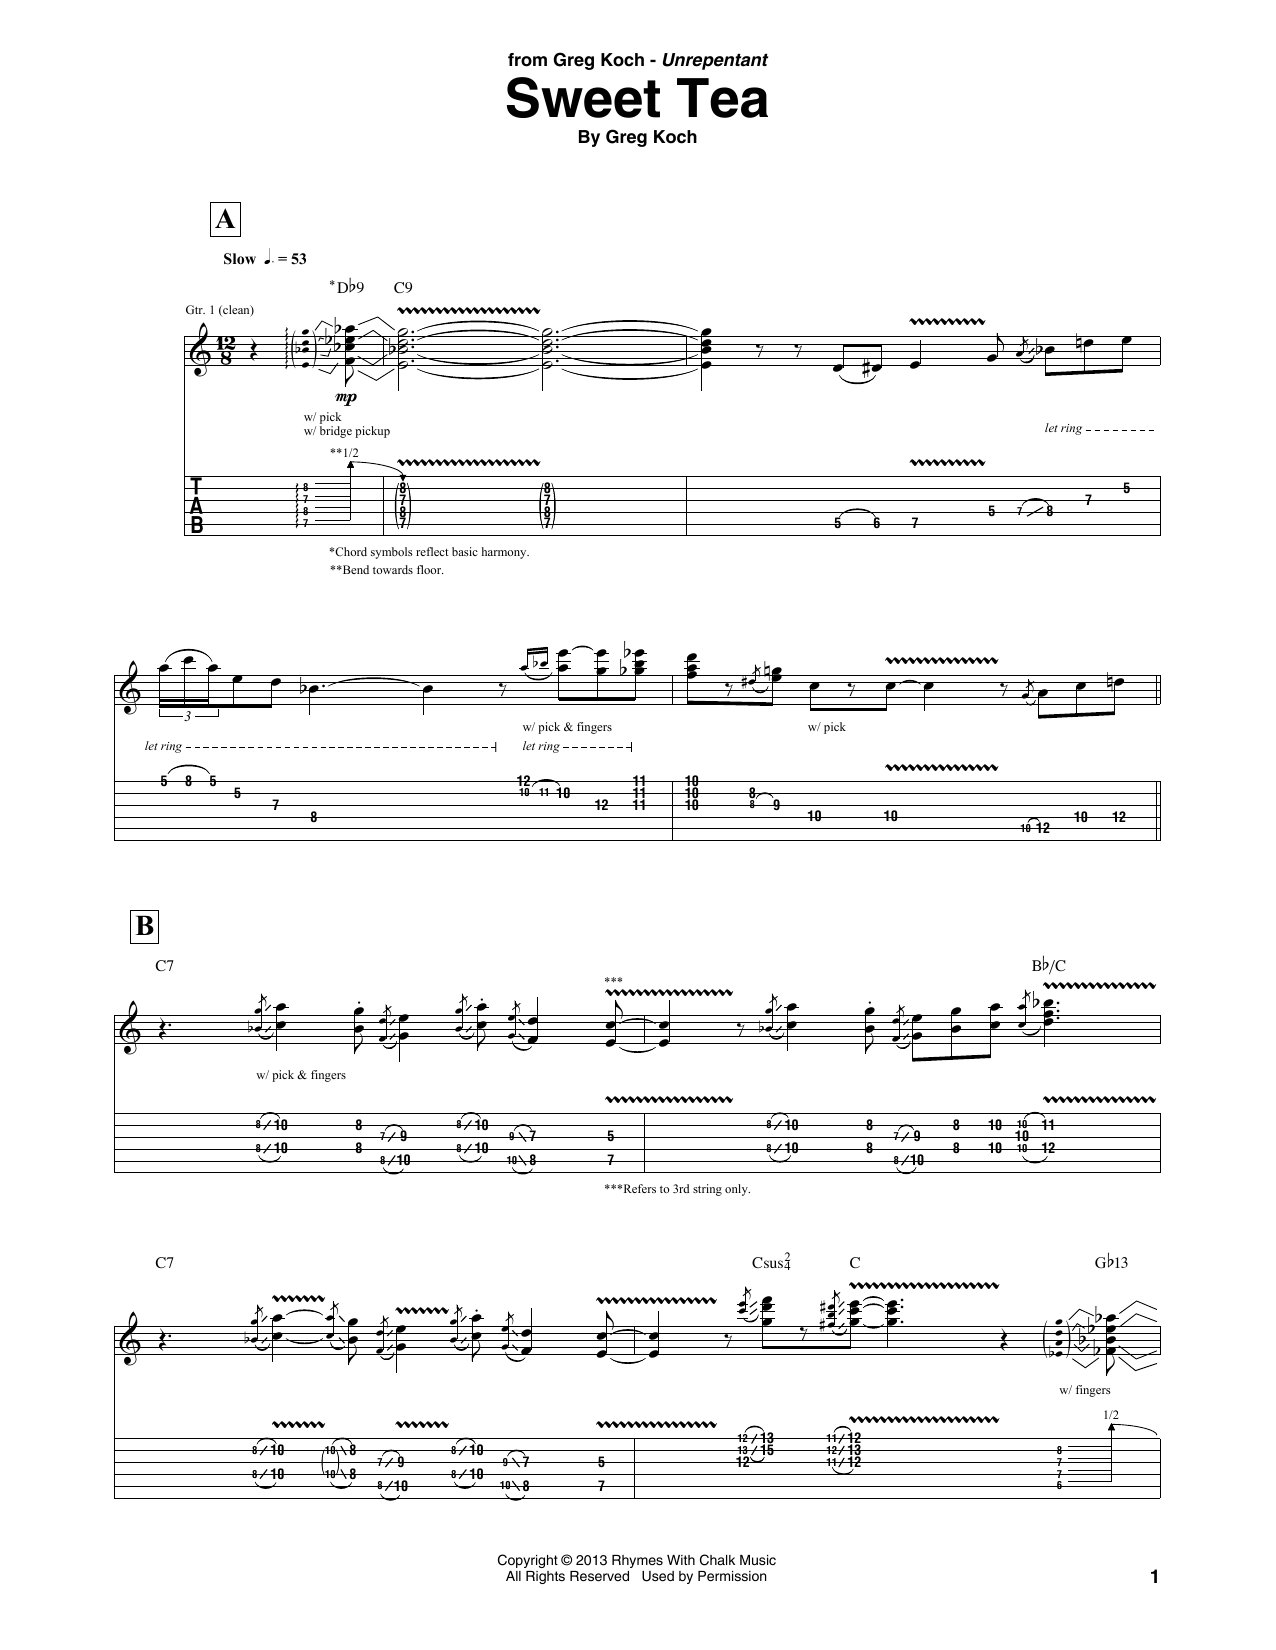 Greg Koch Sweet Tea Sheet Music Notes & Chords for Guitar Tab - Download or Print PDF